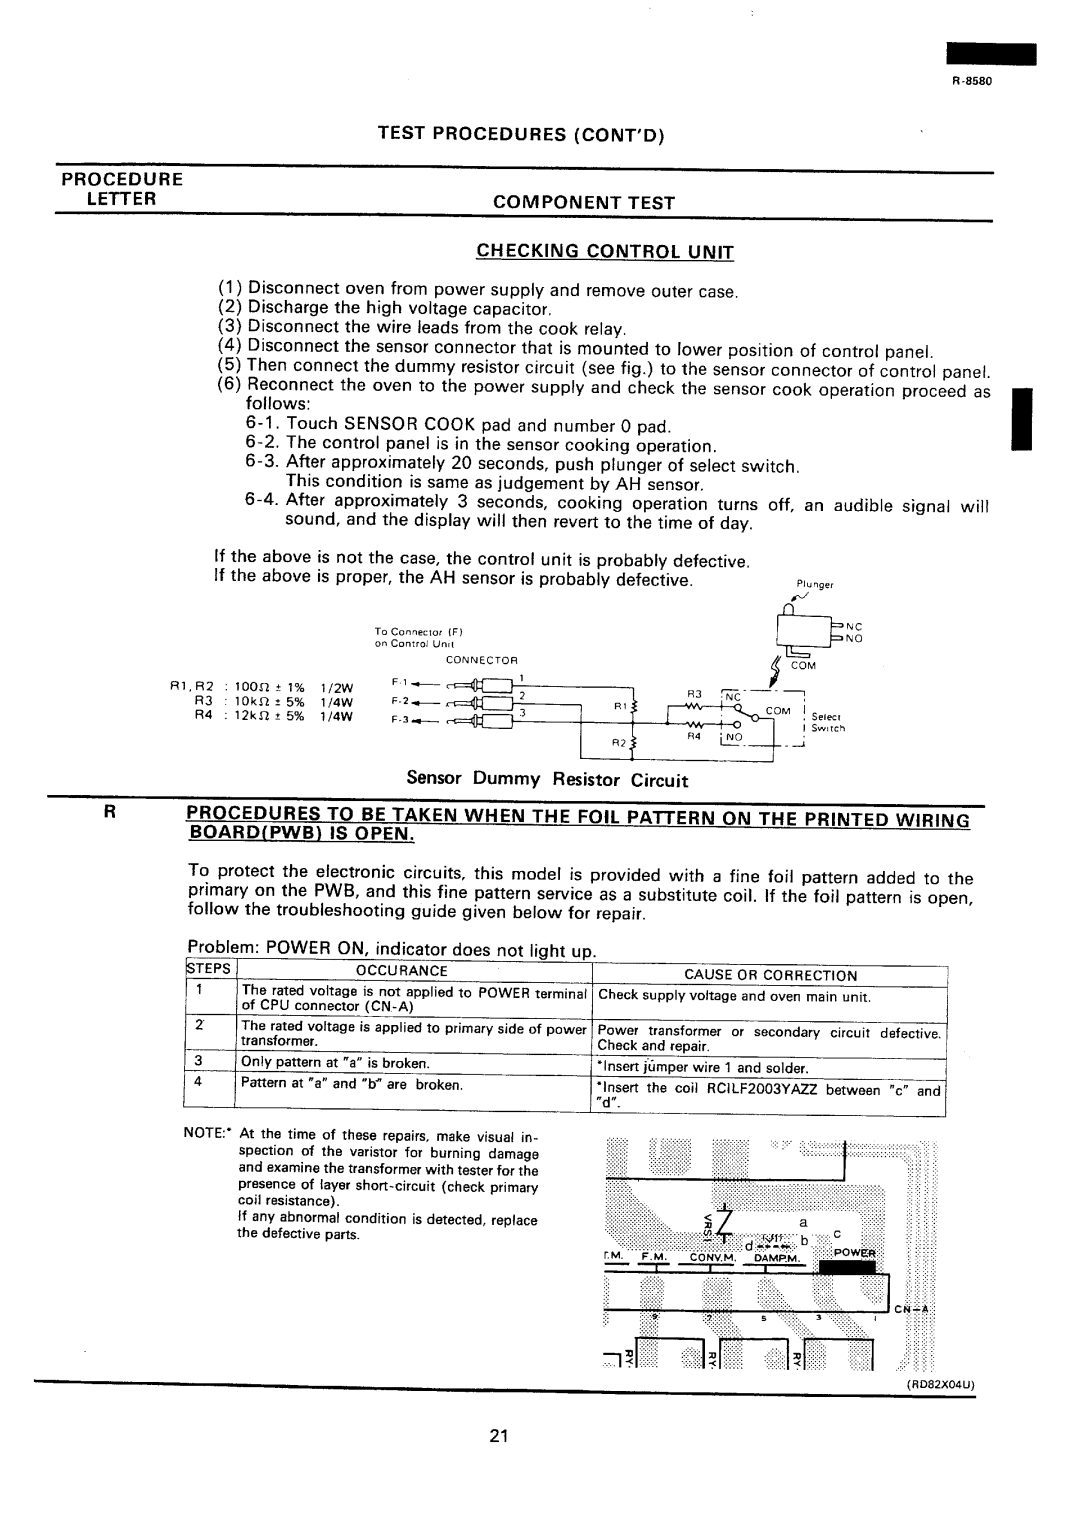 Sharp r-8580 manual Test Procedures Cont’D, Letter, Component, Checking Control Unit, Sensor Dummy Resistor Circuit 